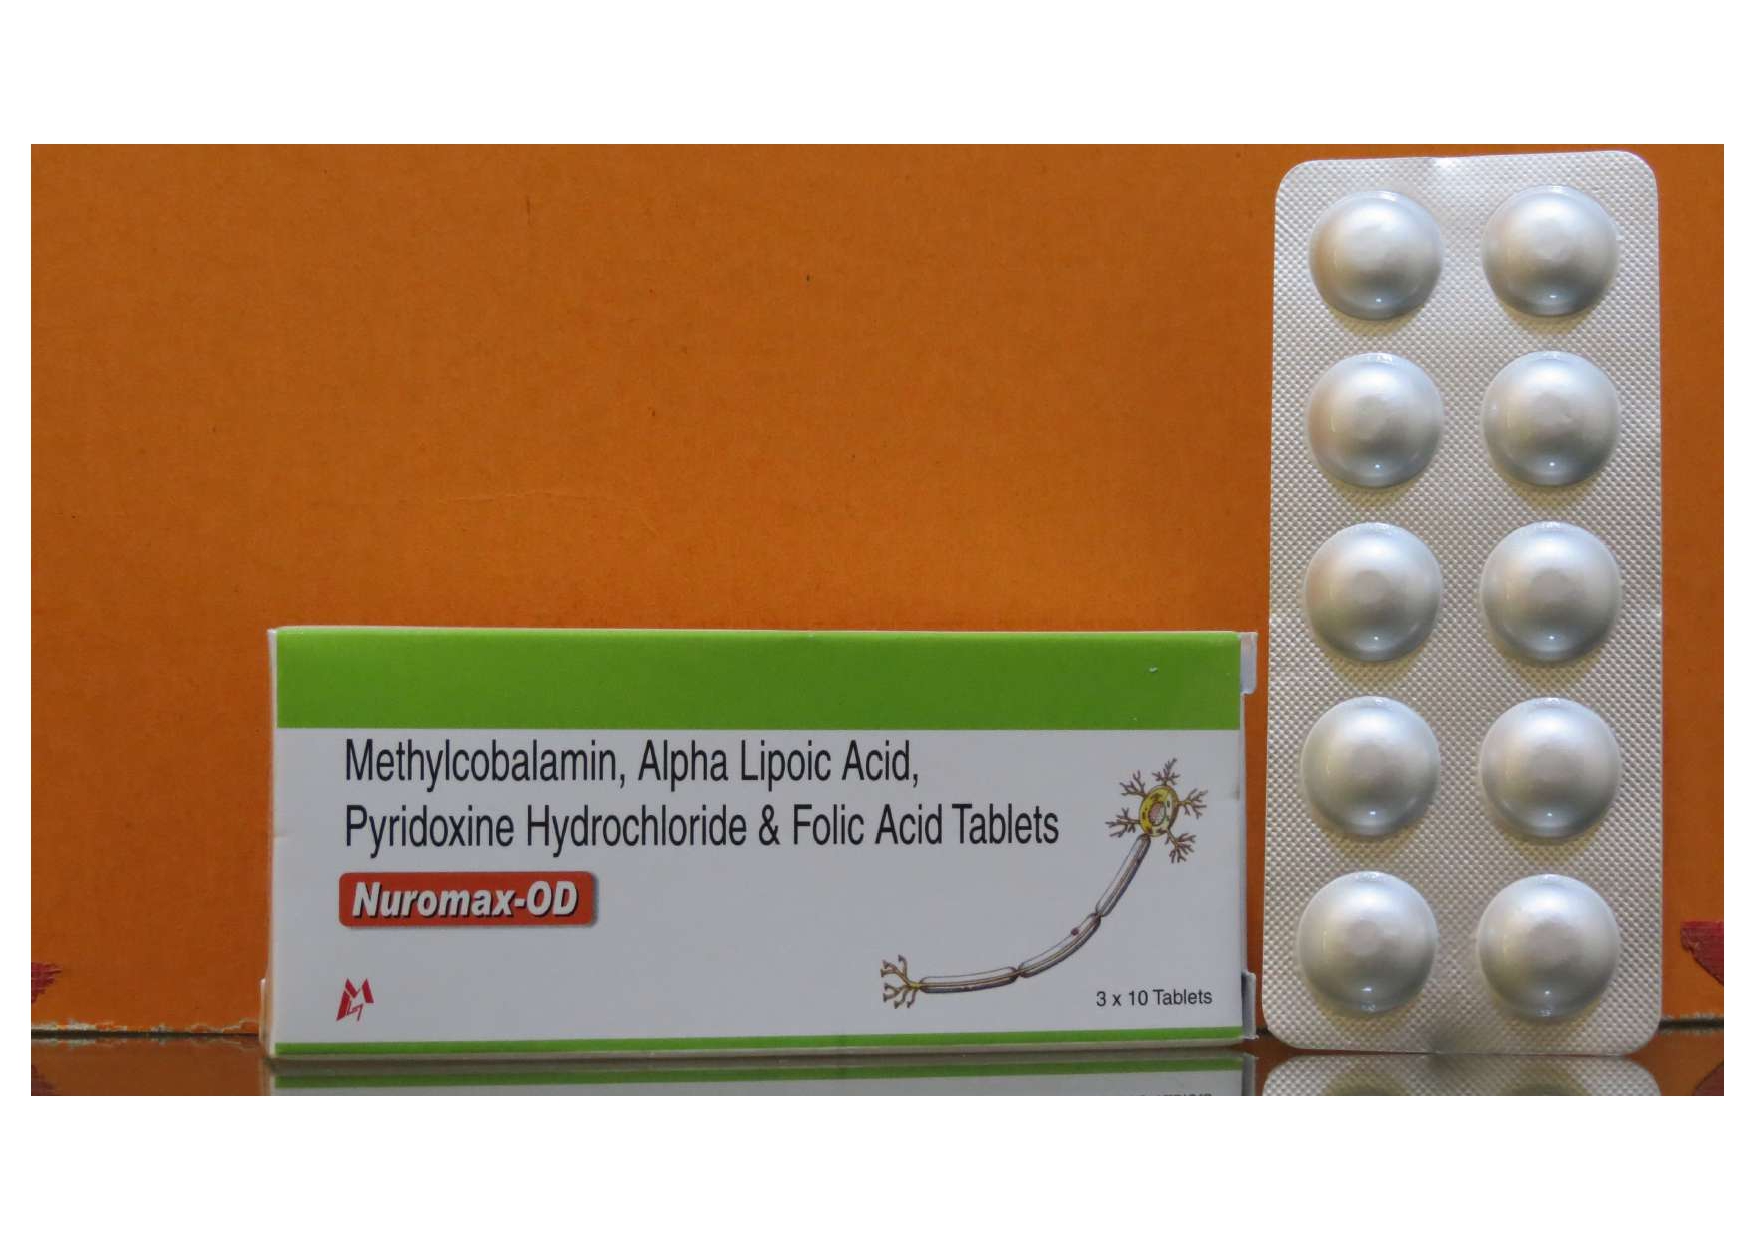 methylcobalamin 1500mcg + alpha lipoic acid
usp 100mg + pyridoxine hcl ip 3mg + folic acid ip 1.5mg tablets